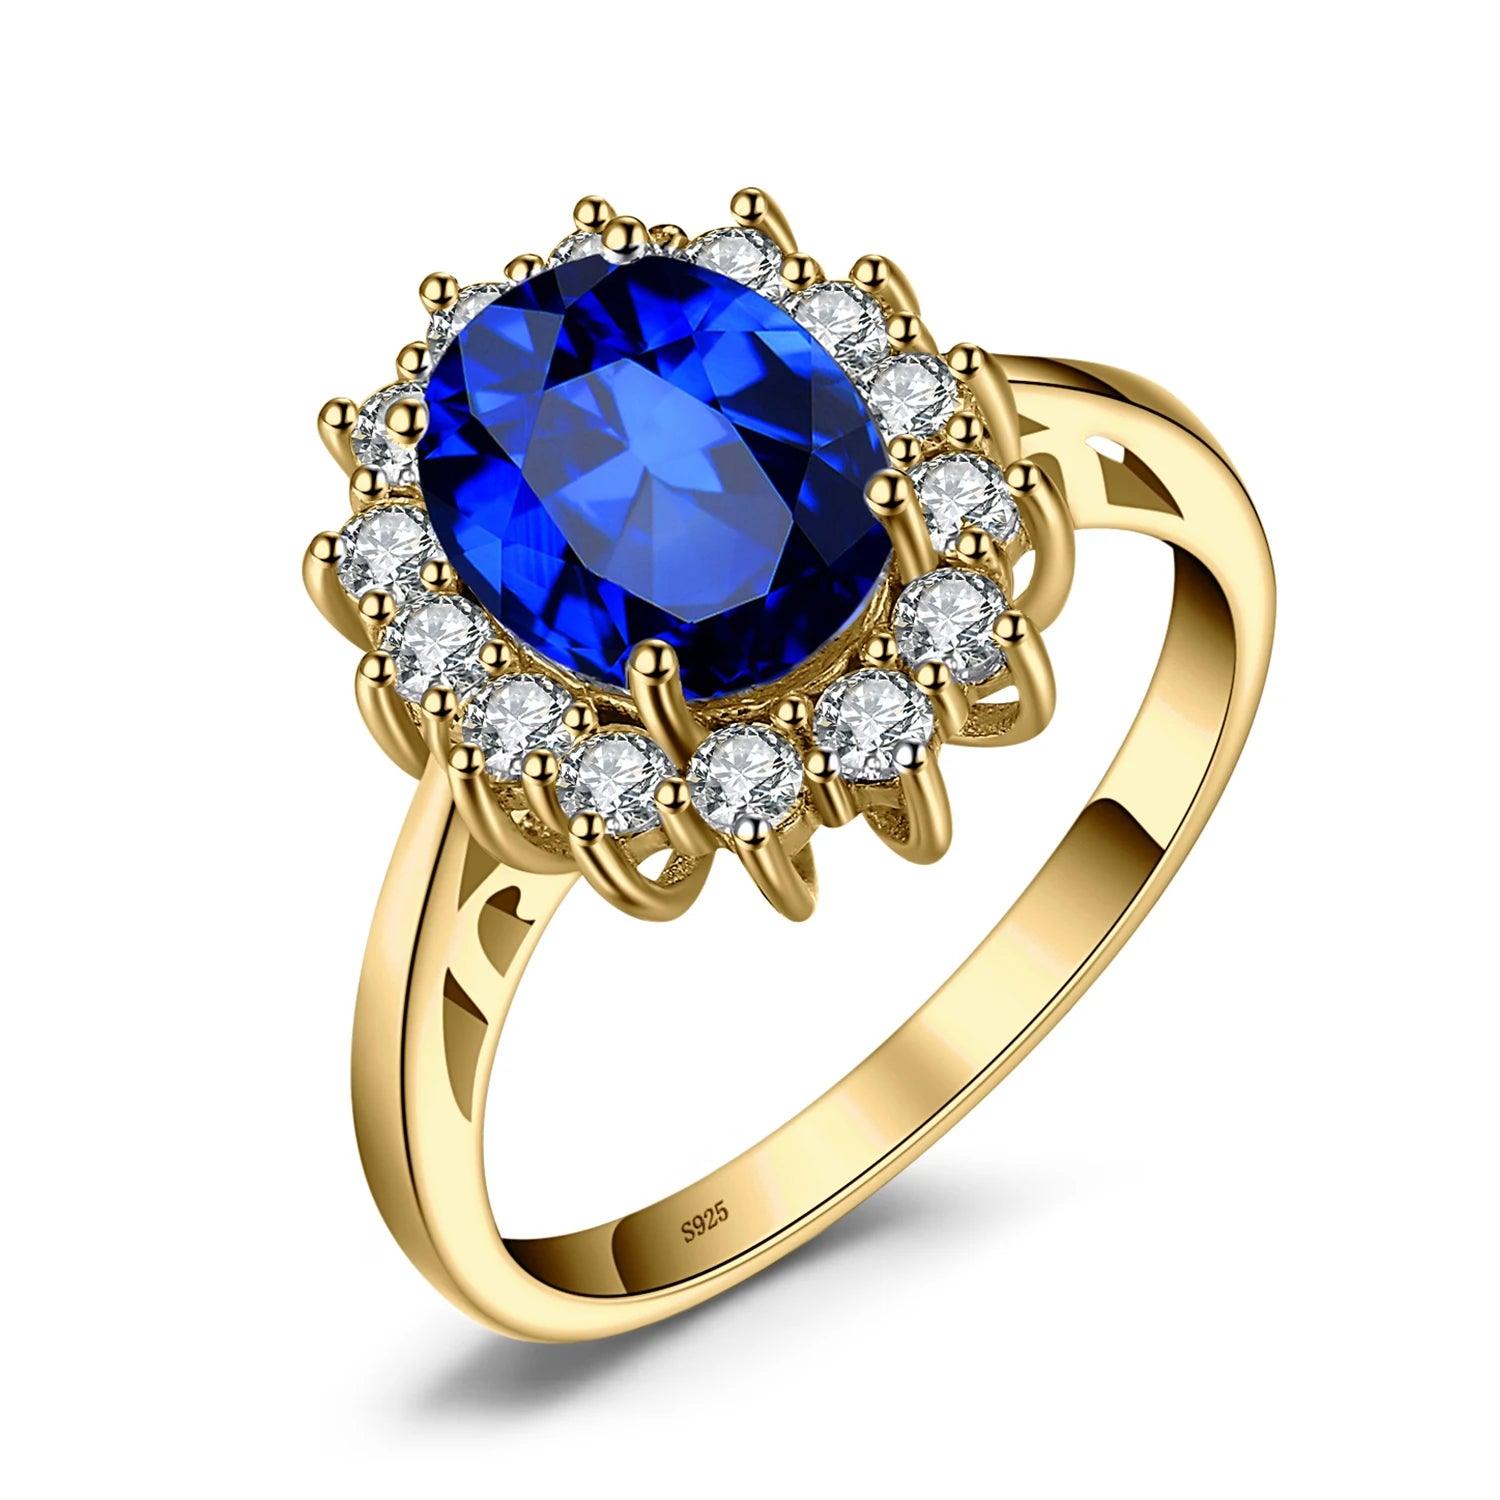 JPBRCJ247 Finger Ring Charm Jewelry - Garnet 925 Sterling Silver - Touchy Style